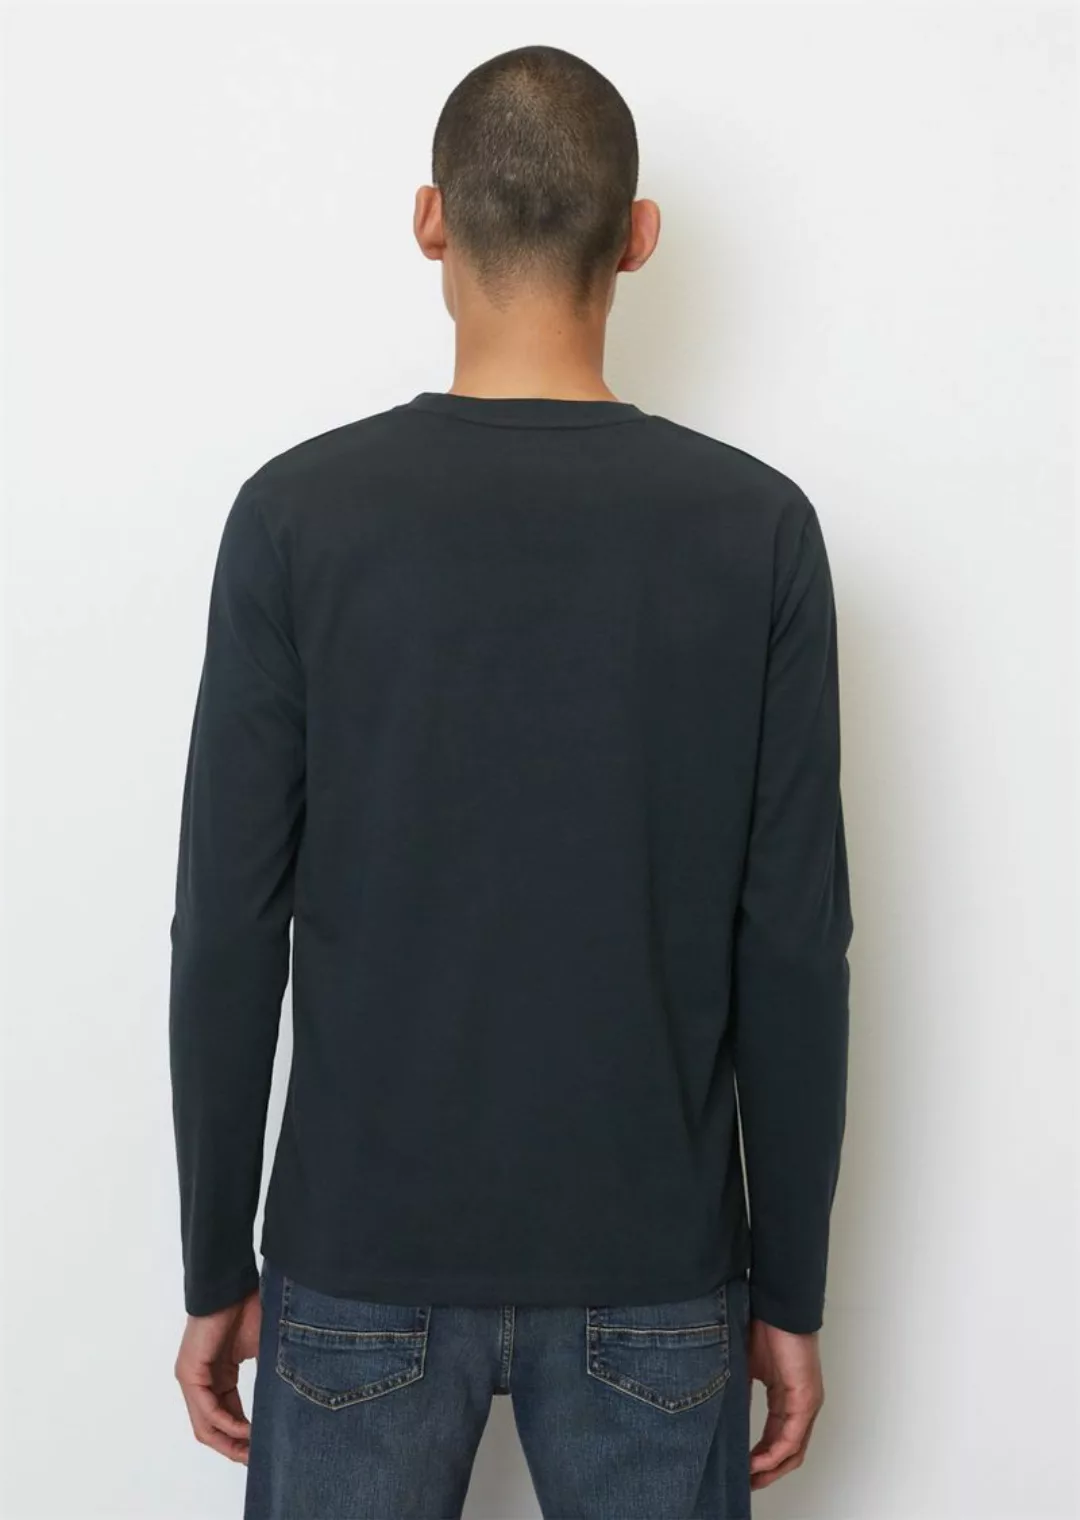 Marc O'Polo Long Sleeve T-Shirt Navy - Größe M günstig online kaufen